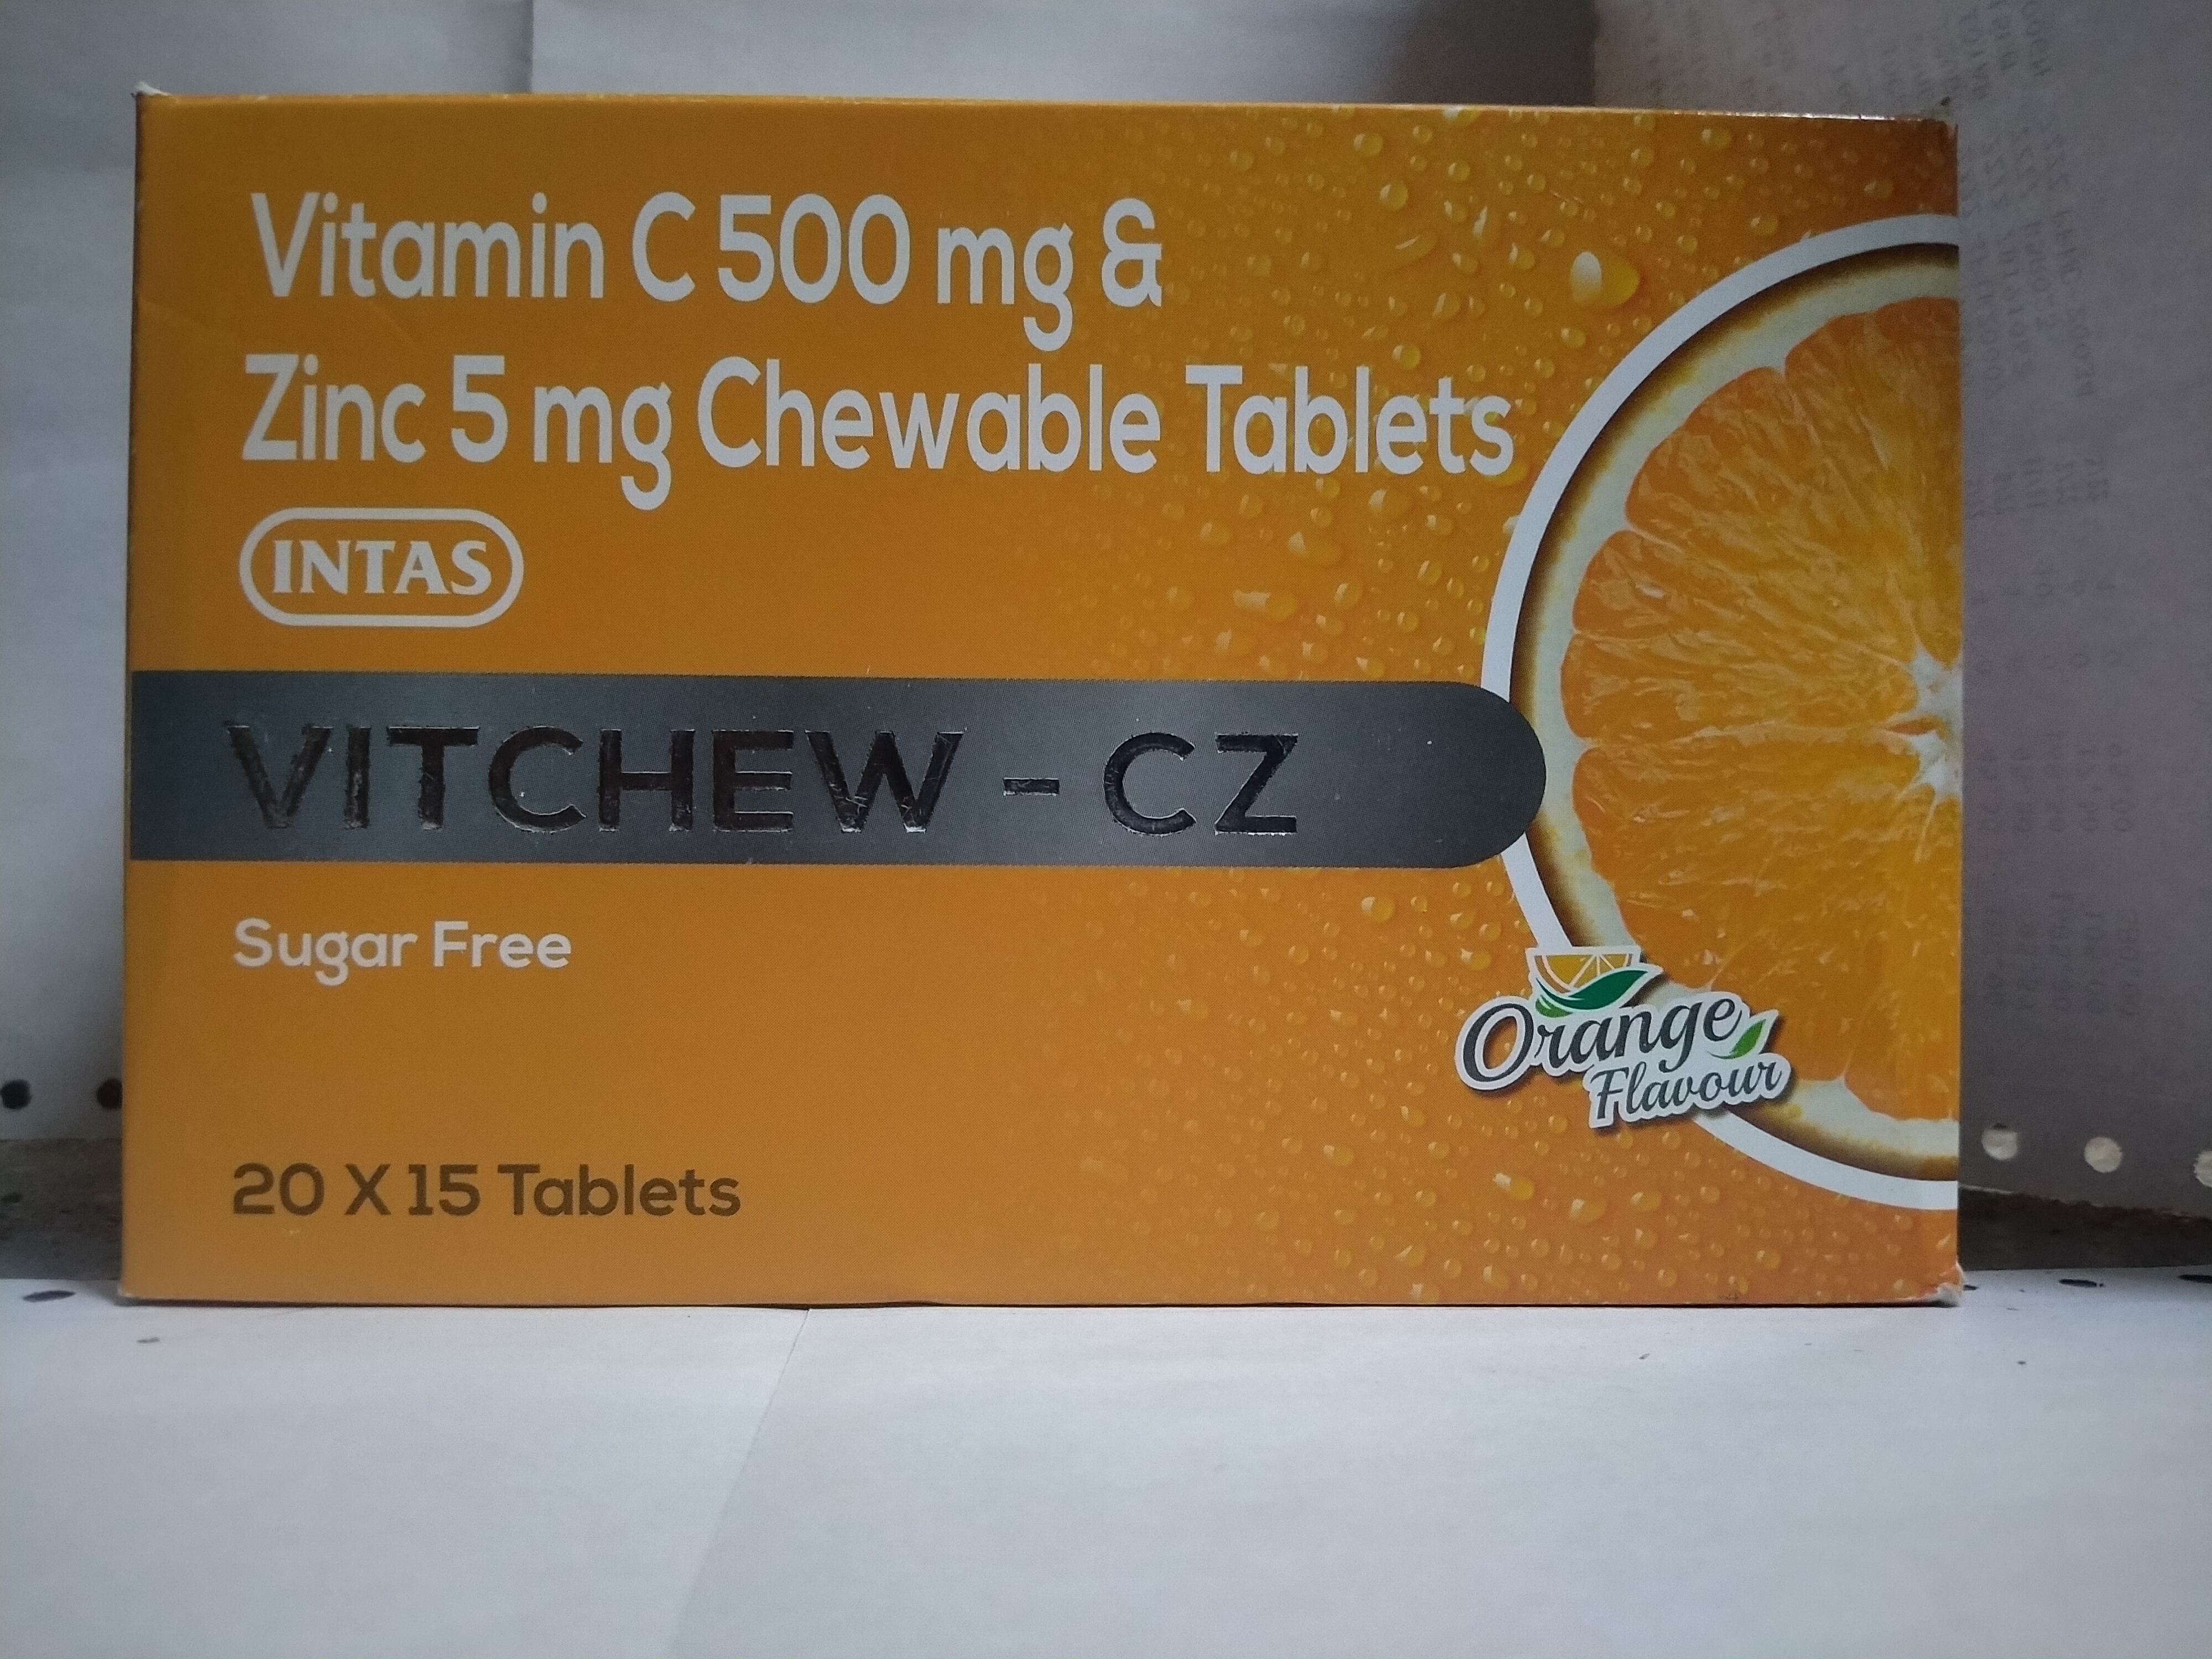 Vitchew Cz Chewable Tablets Orange